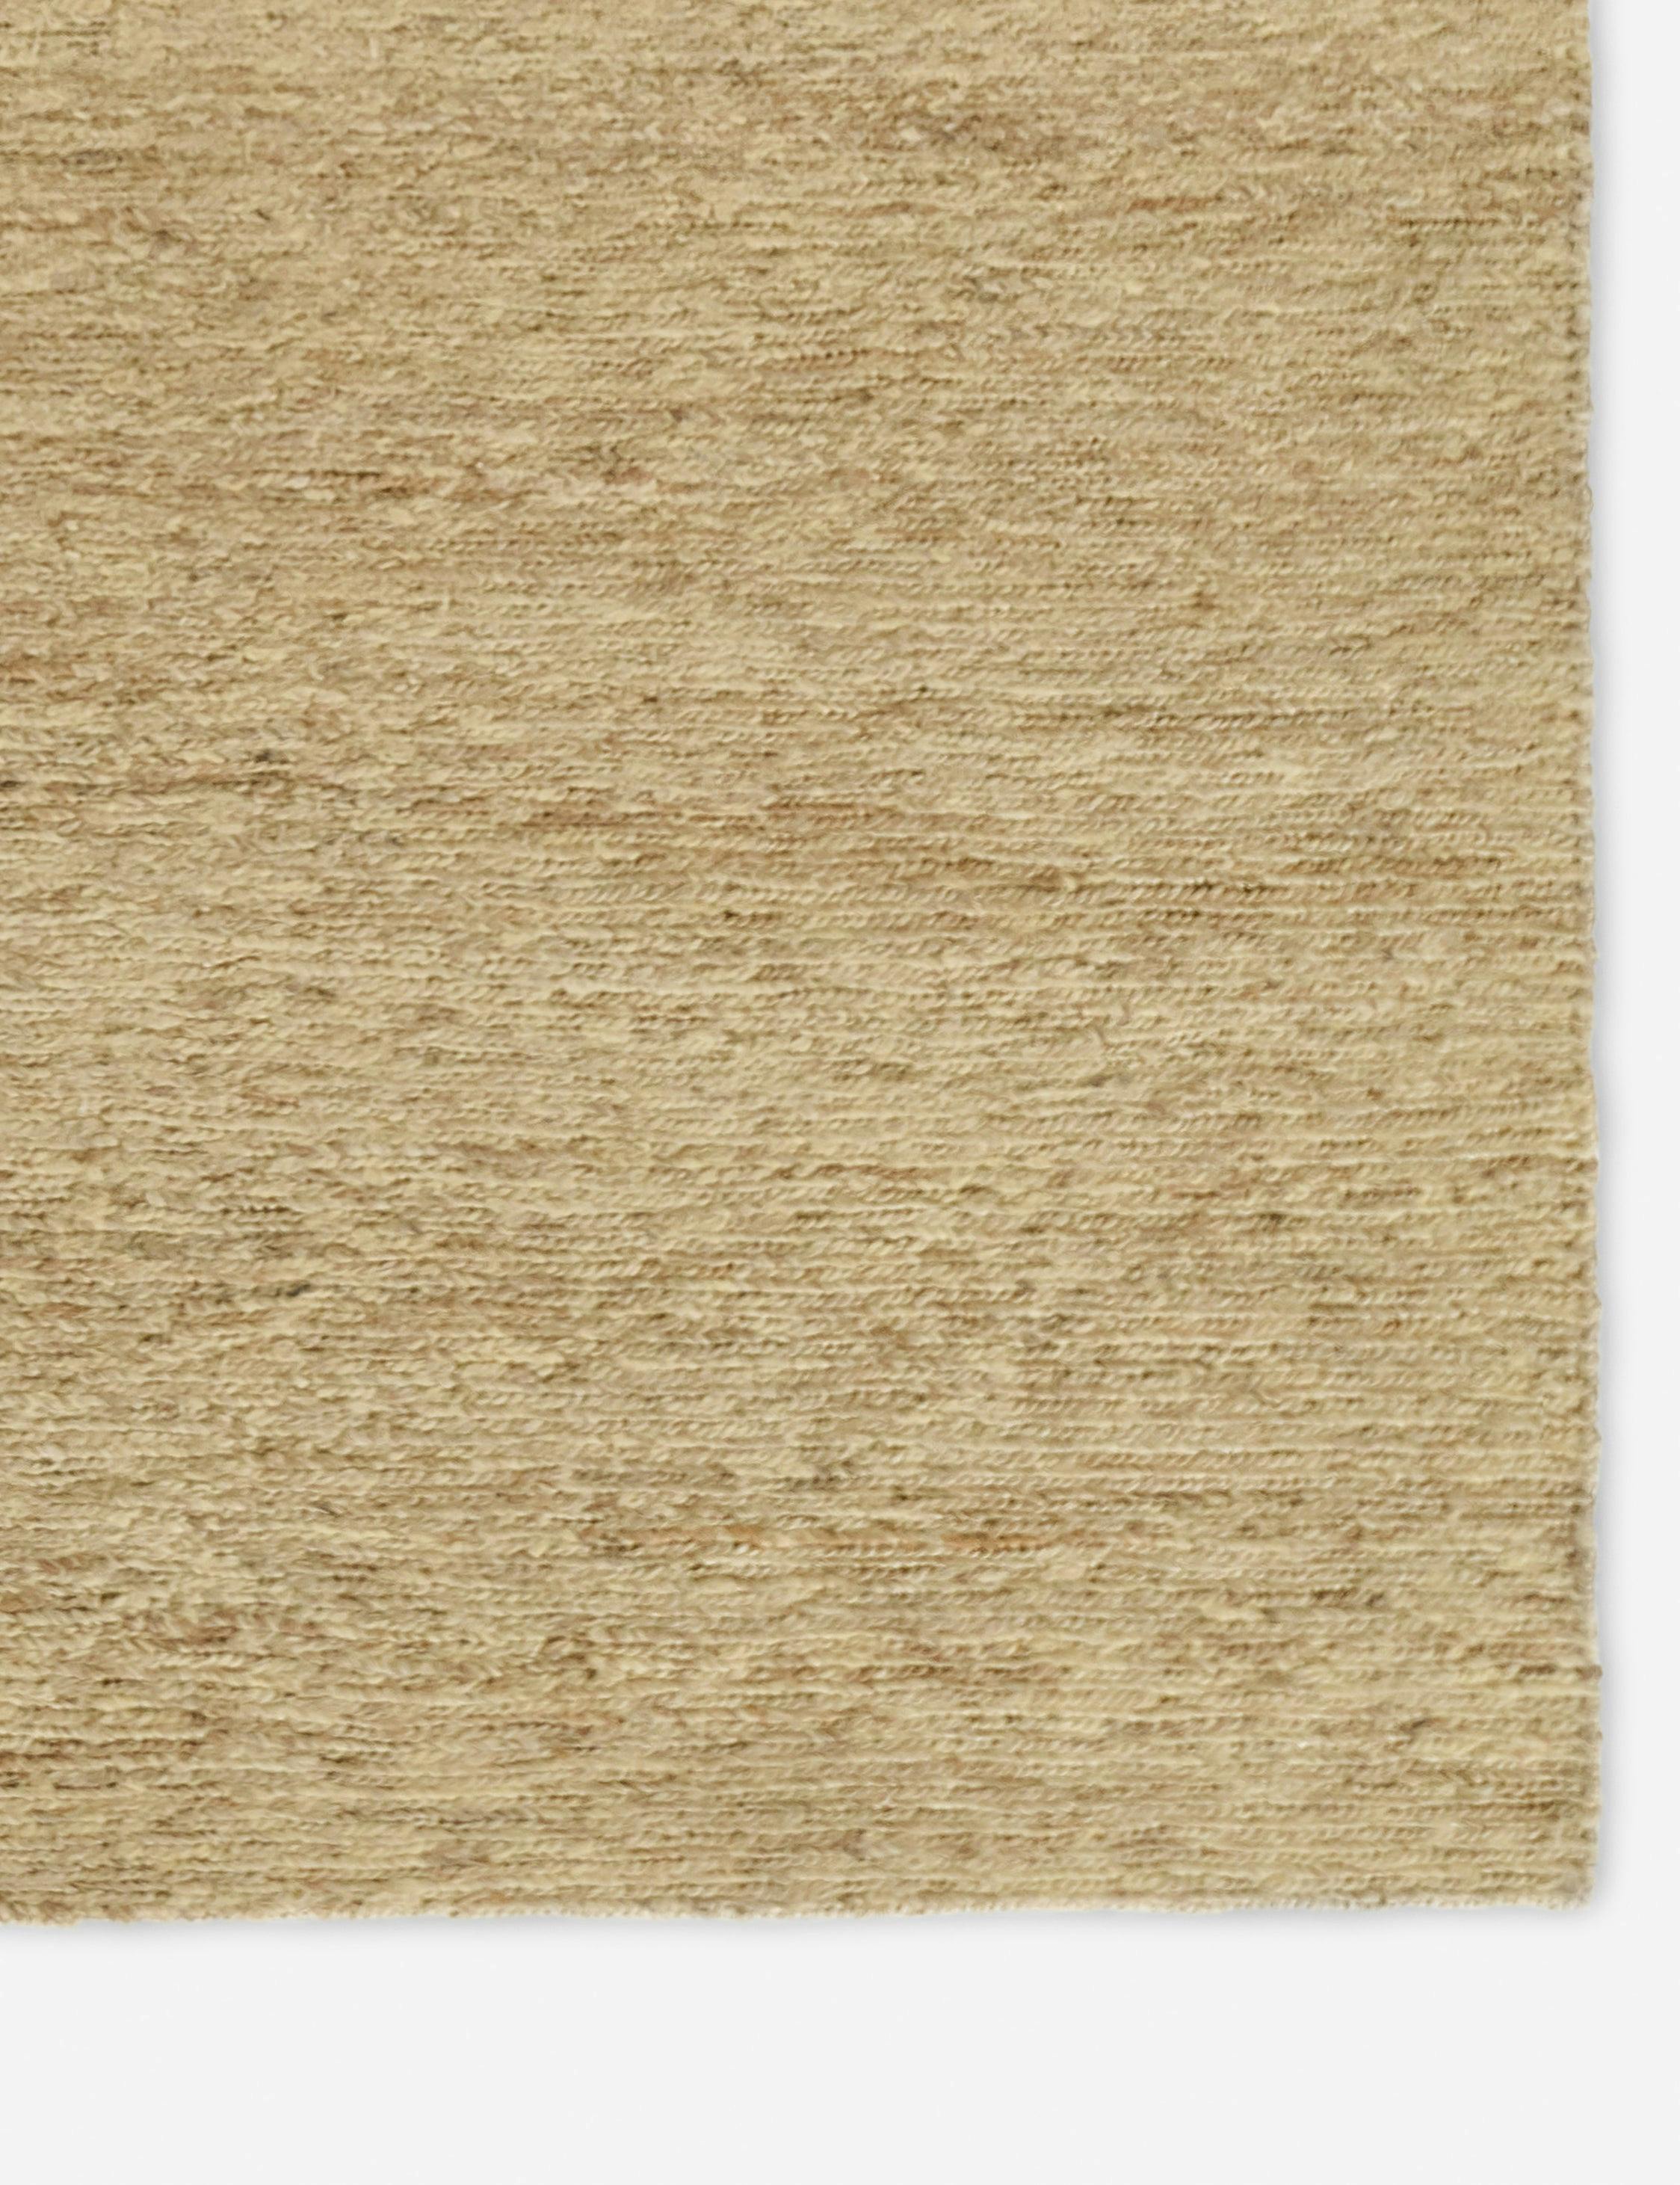 Torquay Natural Round Handwoven Wool & Jute 6'3" x 9' Rug